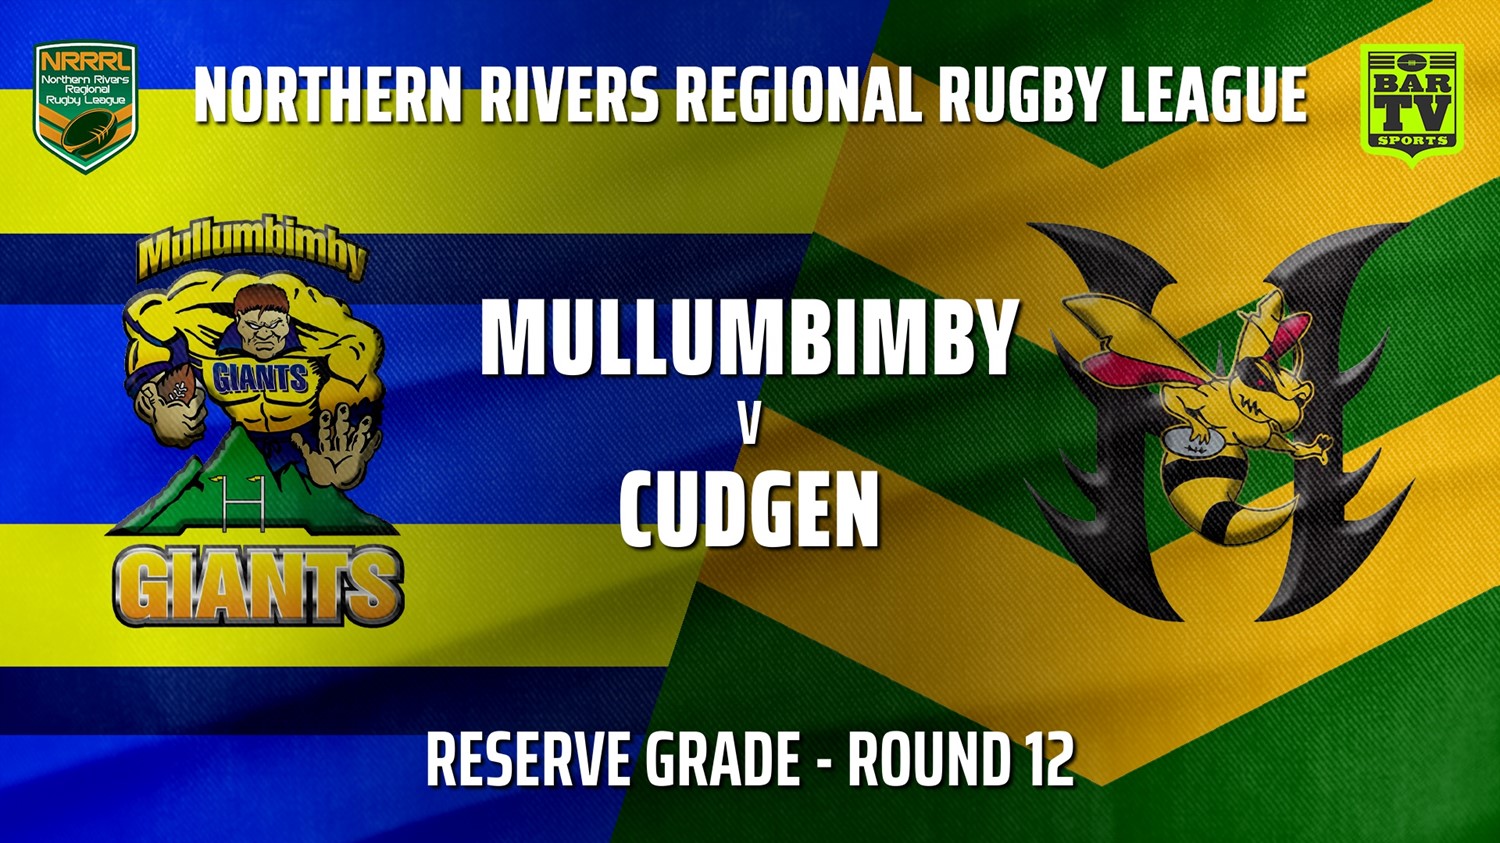 210725-Northern Rivers Round 12 - Reserve Grade - Mullumbimby Giants v Cudgen Hornets Slate Image